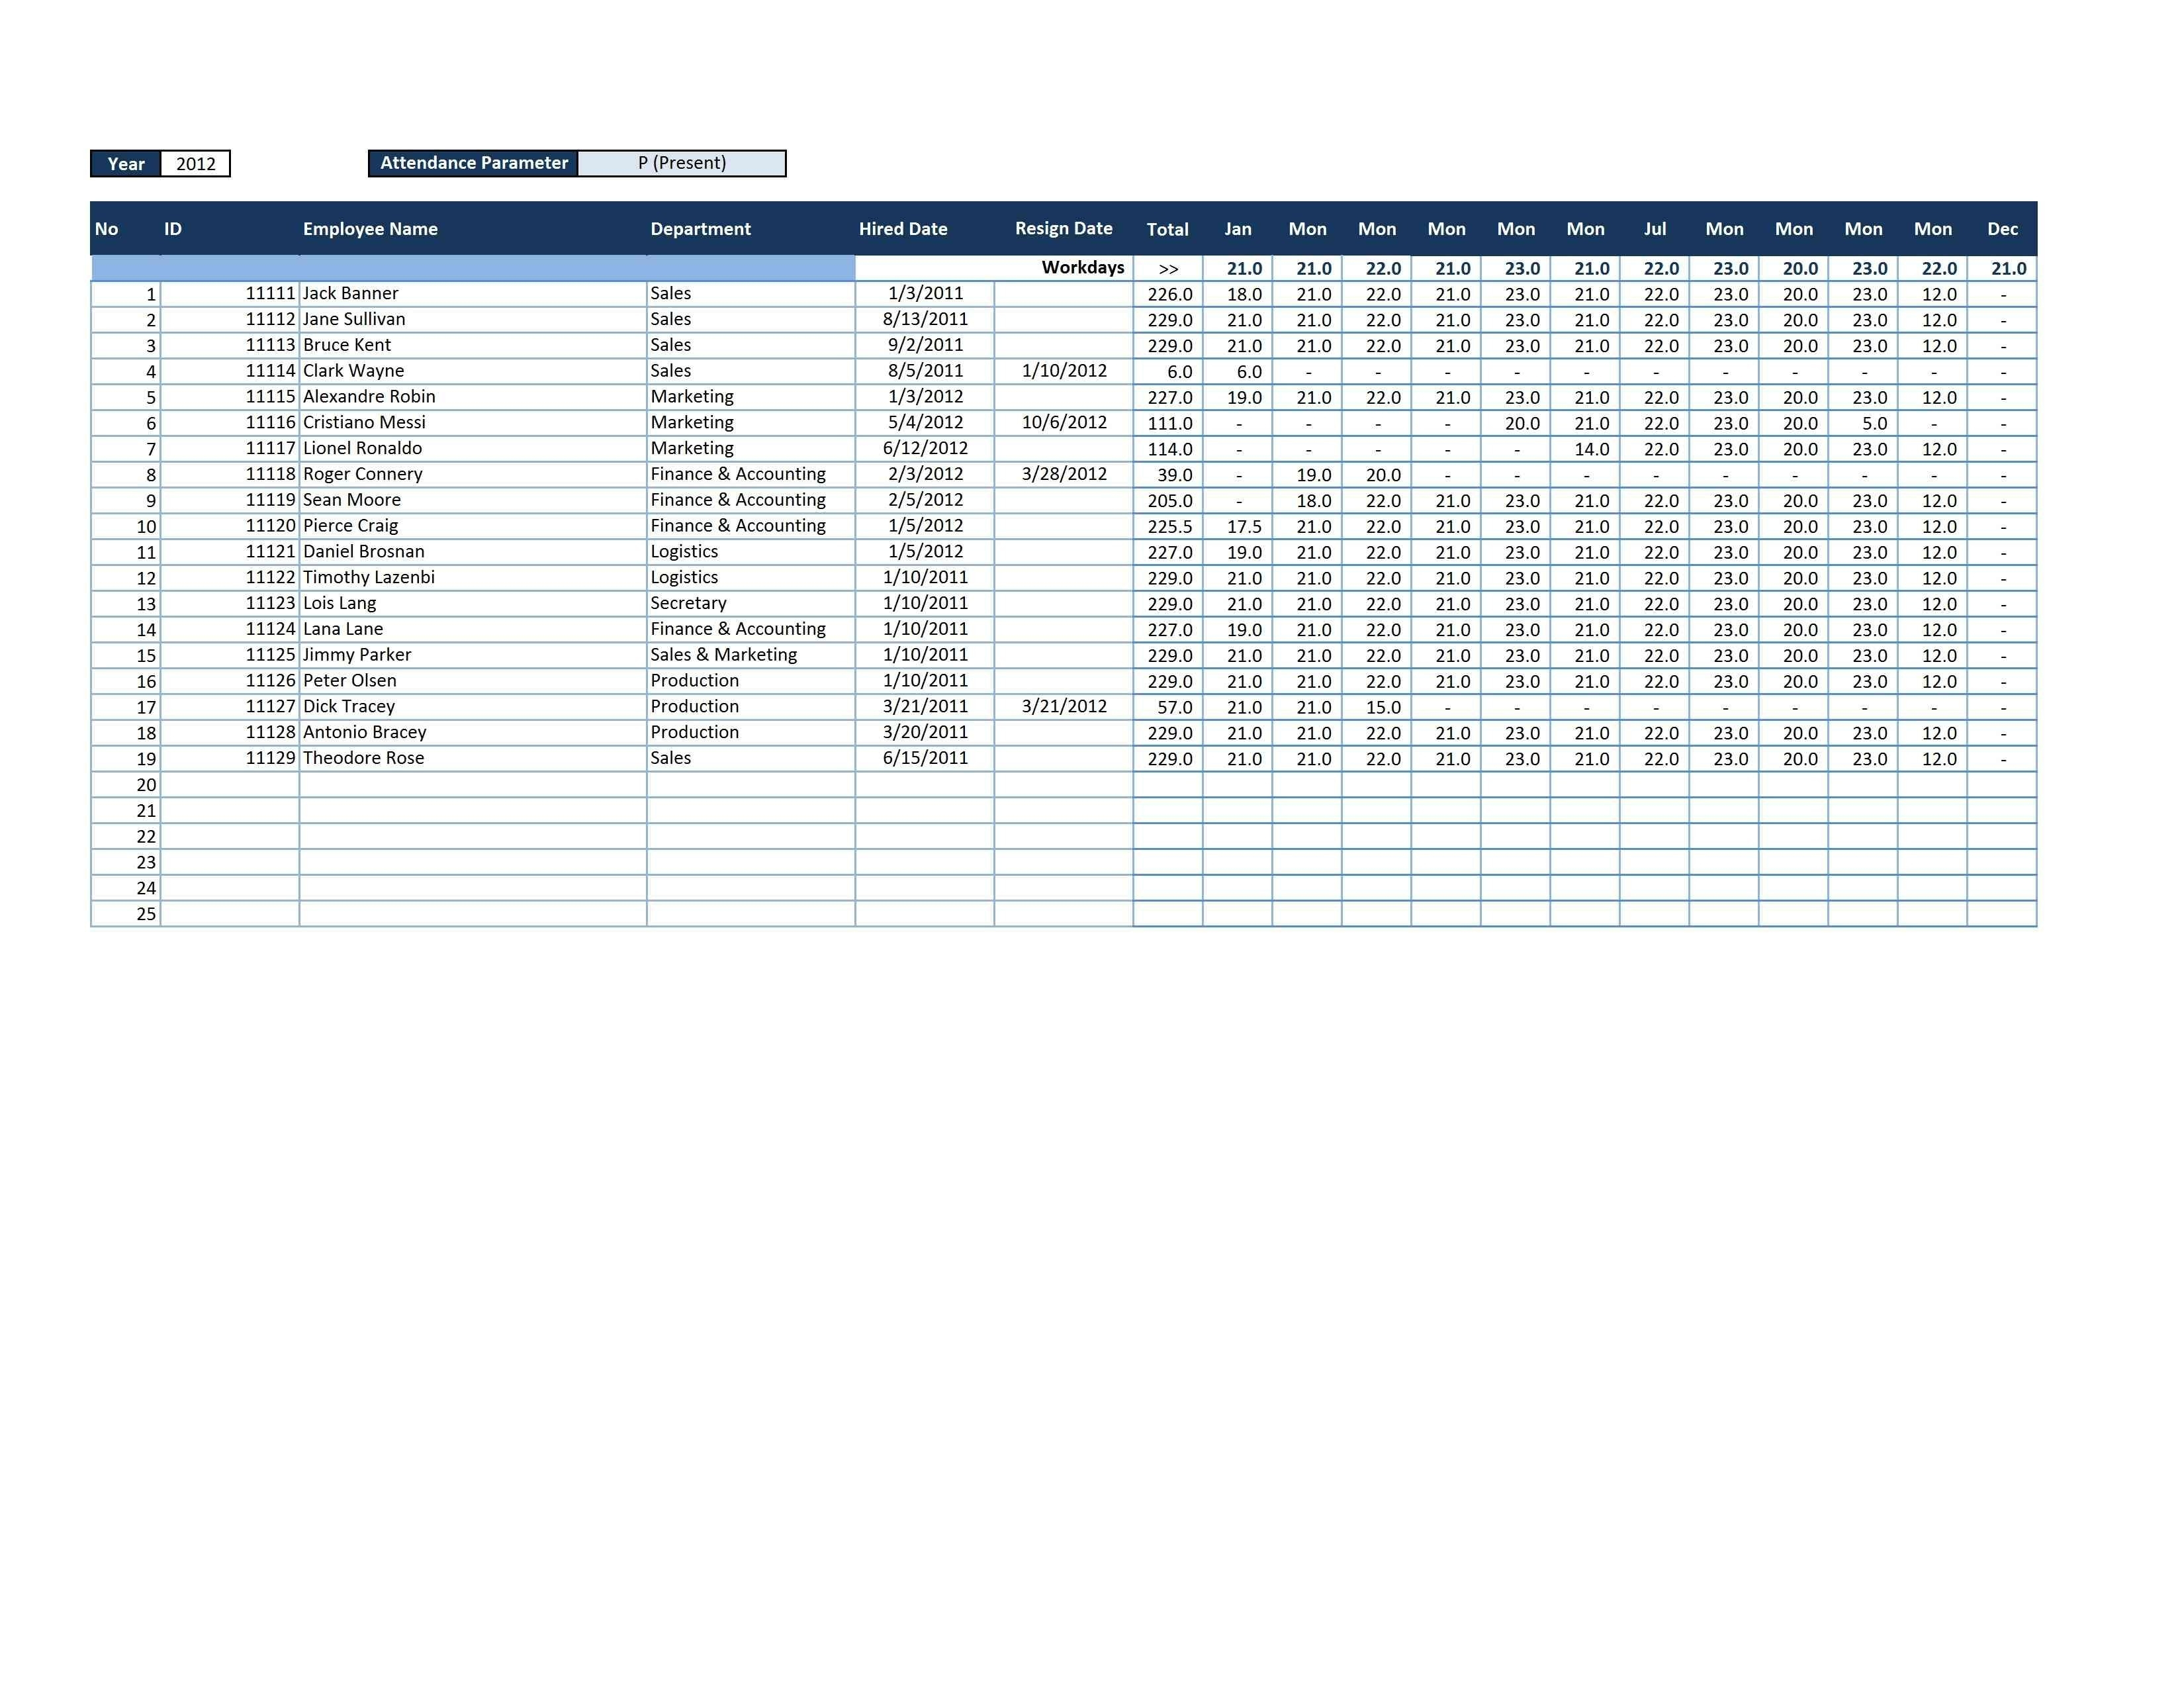 Employee Attendance Point System Spreadsheet For Employee Attendance Point System Spreadsheet Examples Calendar Excel